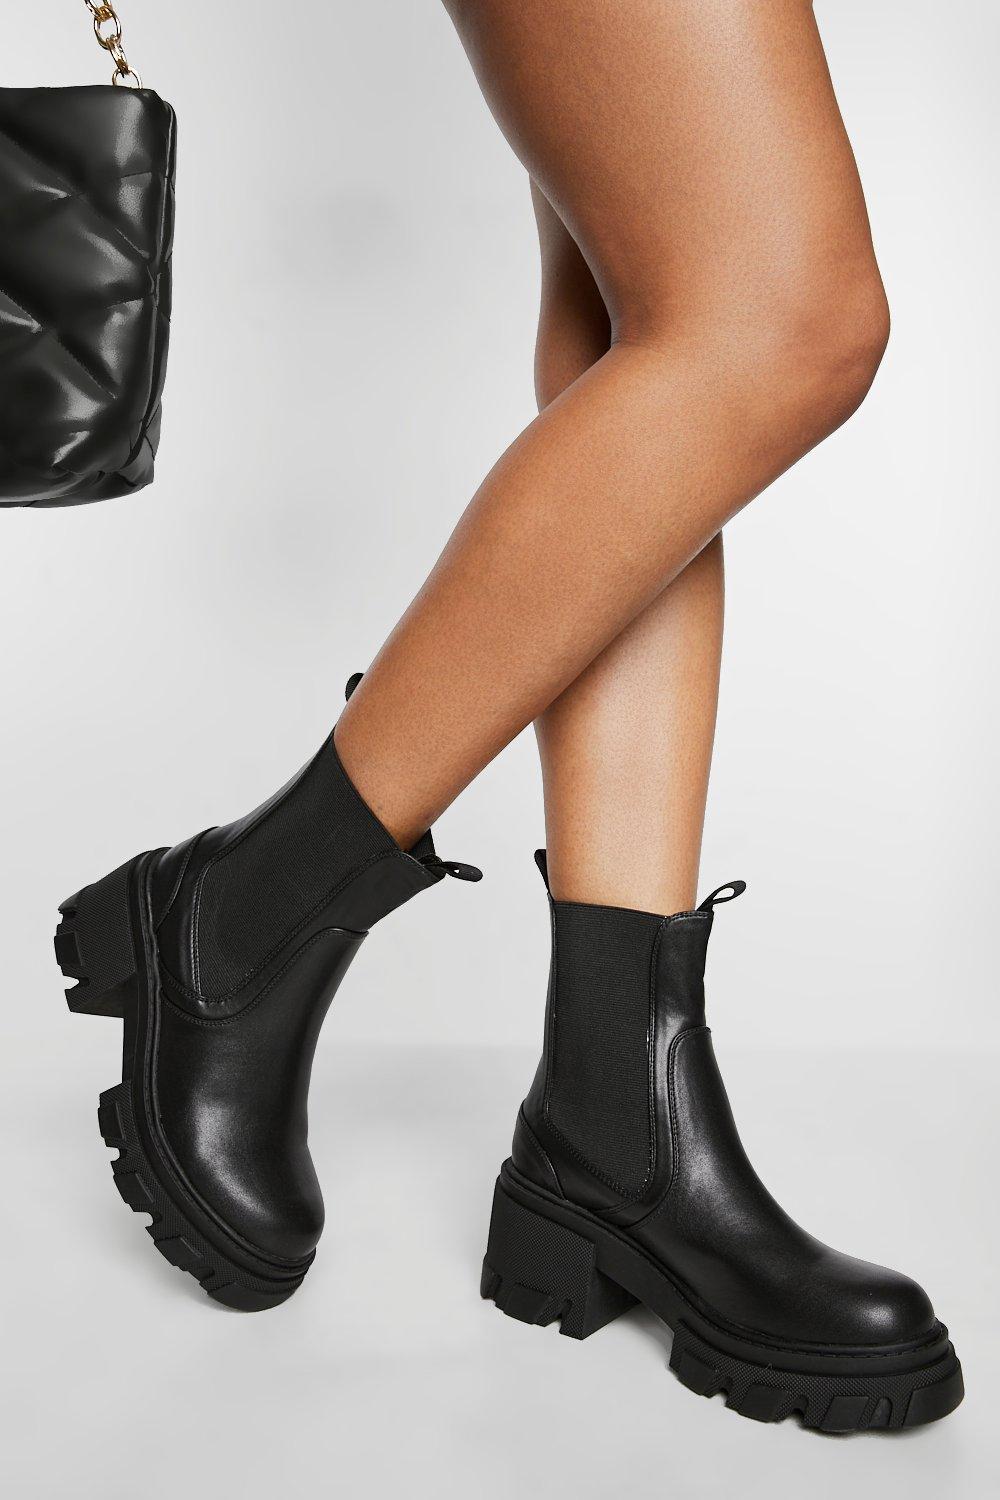 Womens Chunky Heeled Chelsea Boots - Black - 6, Black